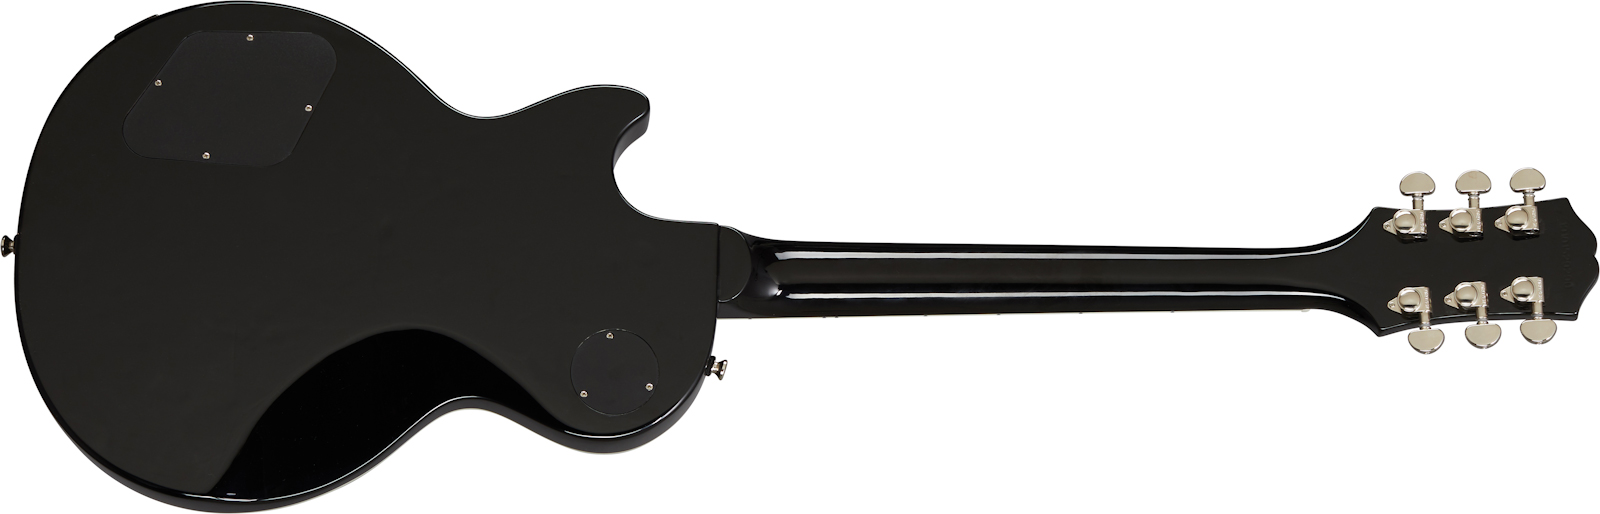 Epiphone Les Paul Muse Modern 2h Ht Lau - Jet Black Metallic - Single-Cut-E-Gitarre - Variation 2